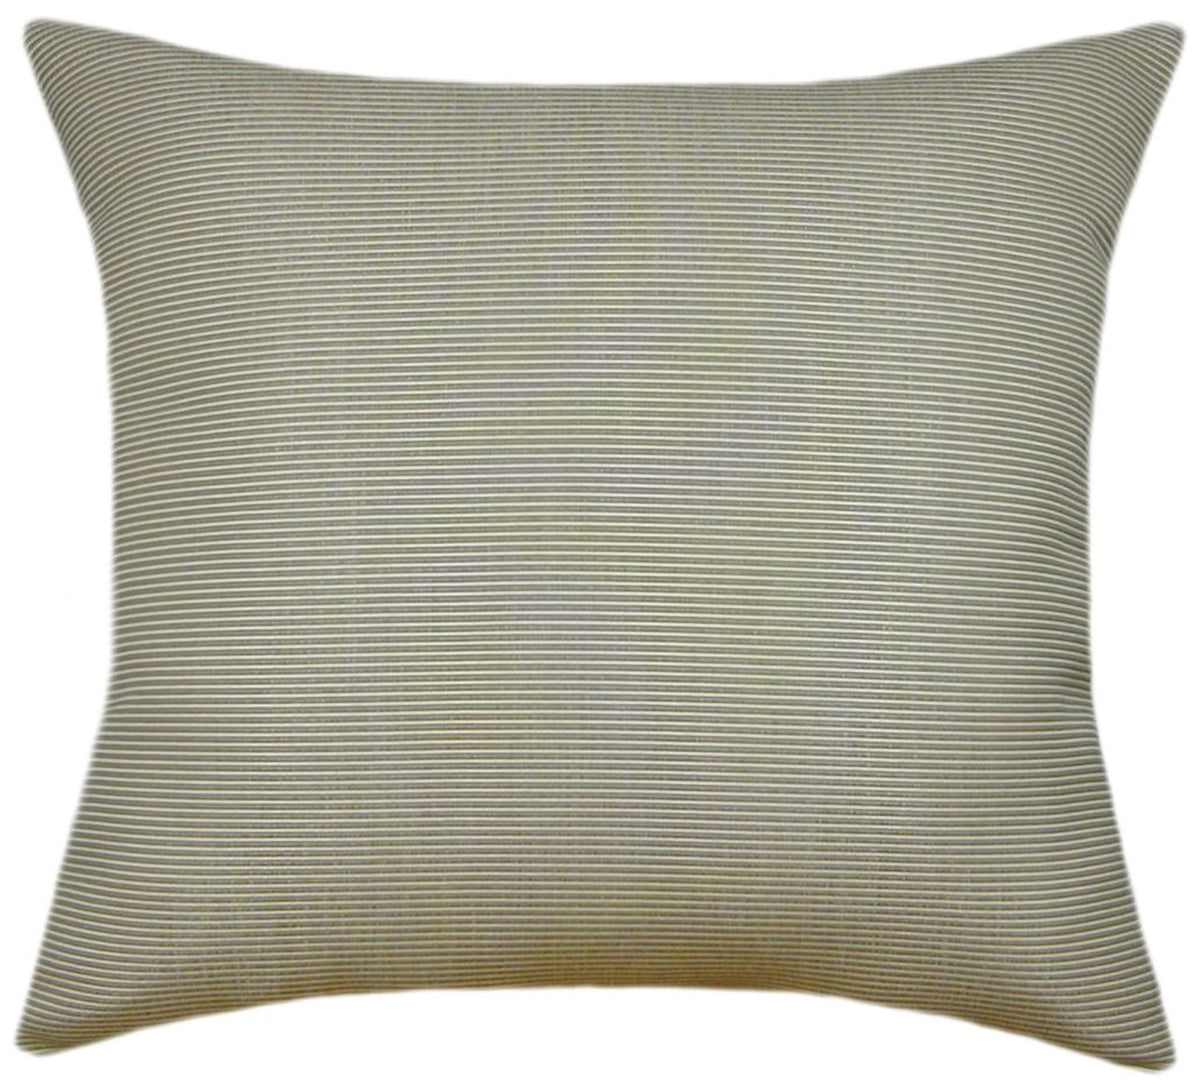 Sunbrella® Rib Taupe-Antique Beige Indoor/Outdoor Textured Solid Color Pillow